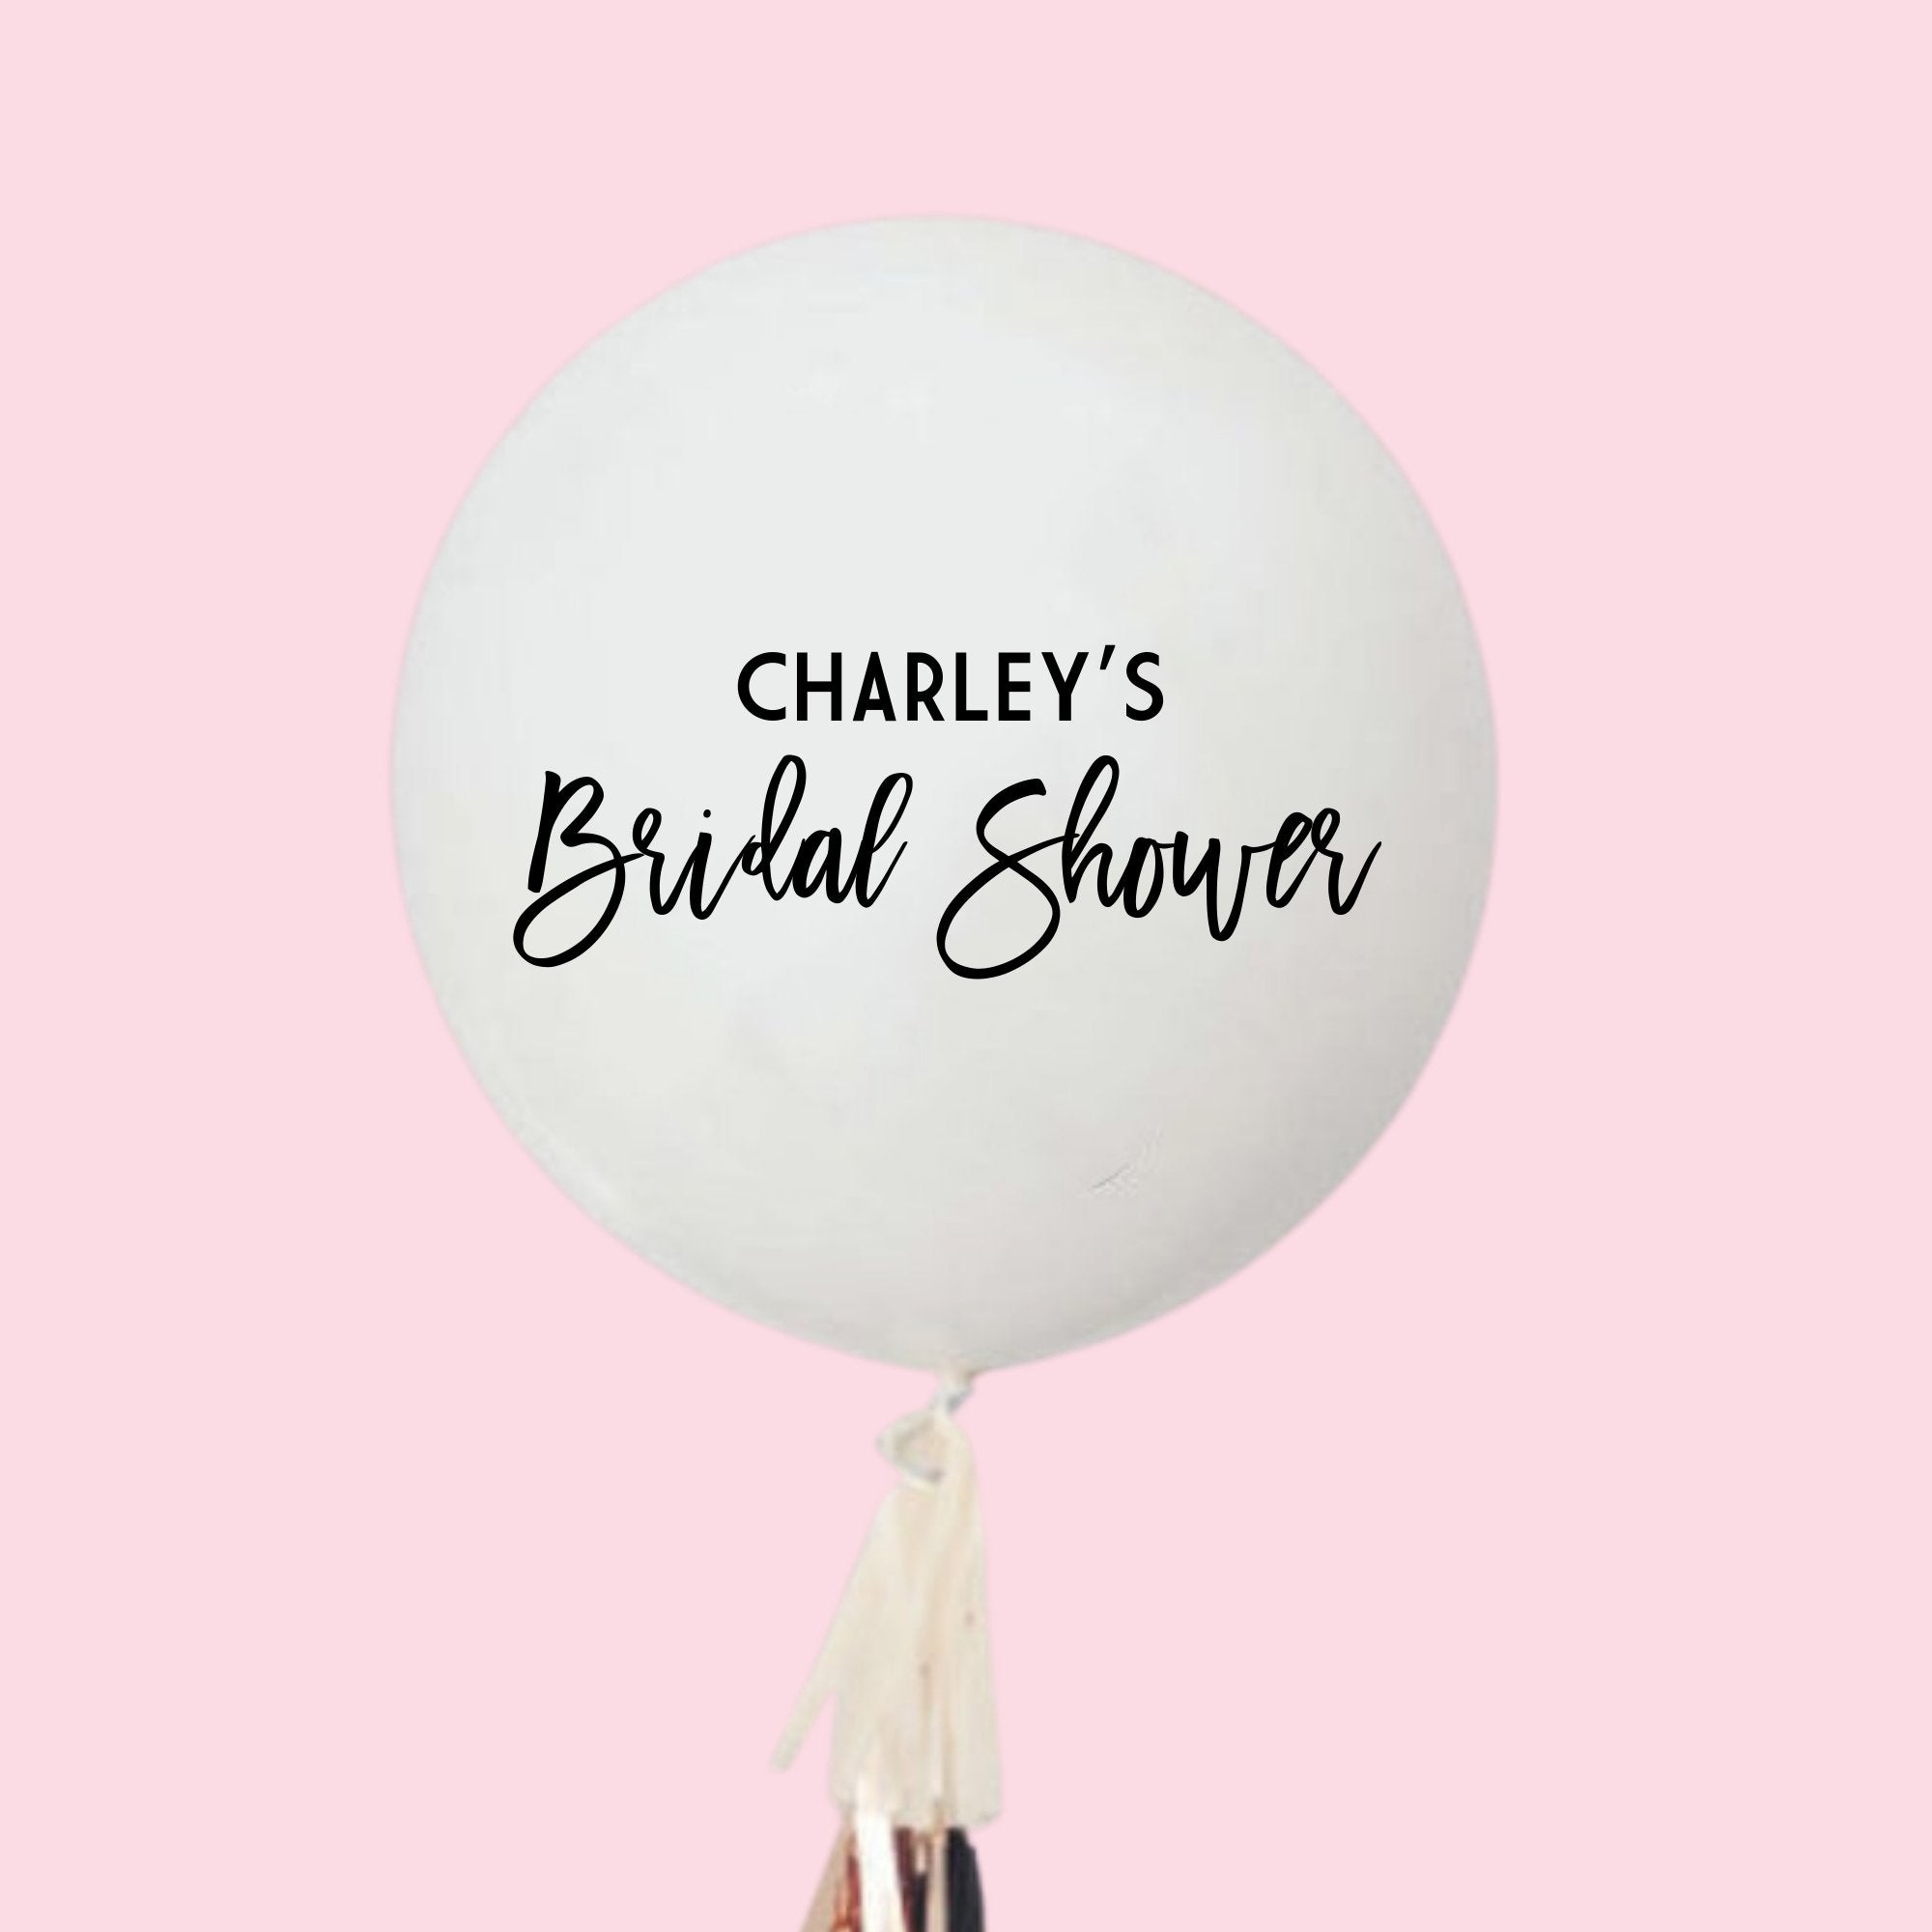 A white jumbo balloon reads "Charley's Bridal Shower"